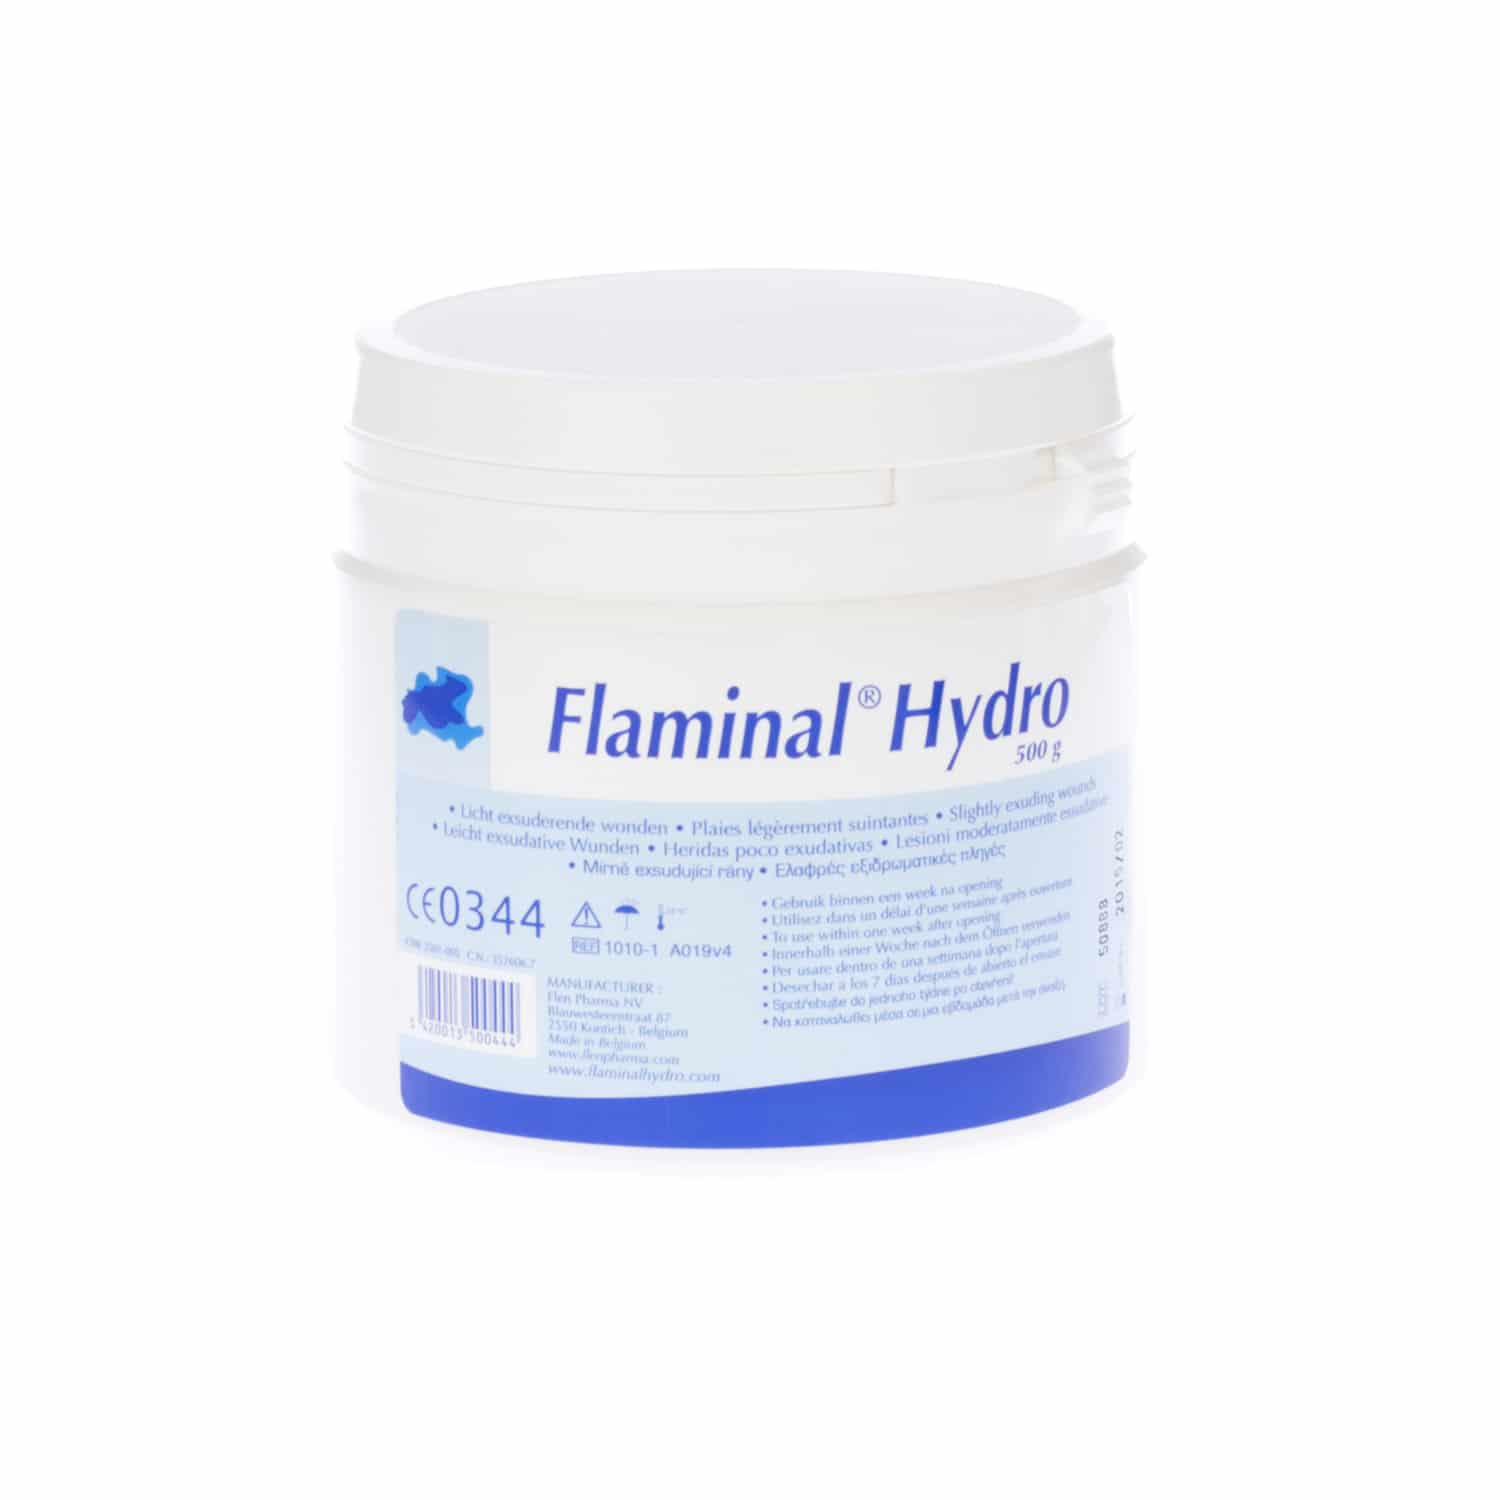 Flaminal Hydro